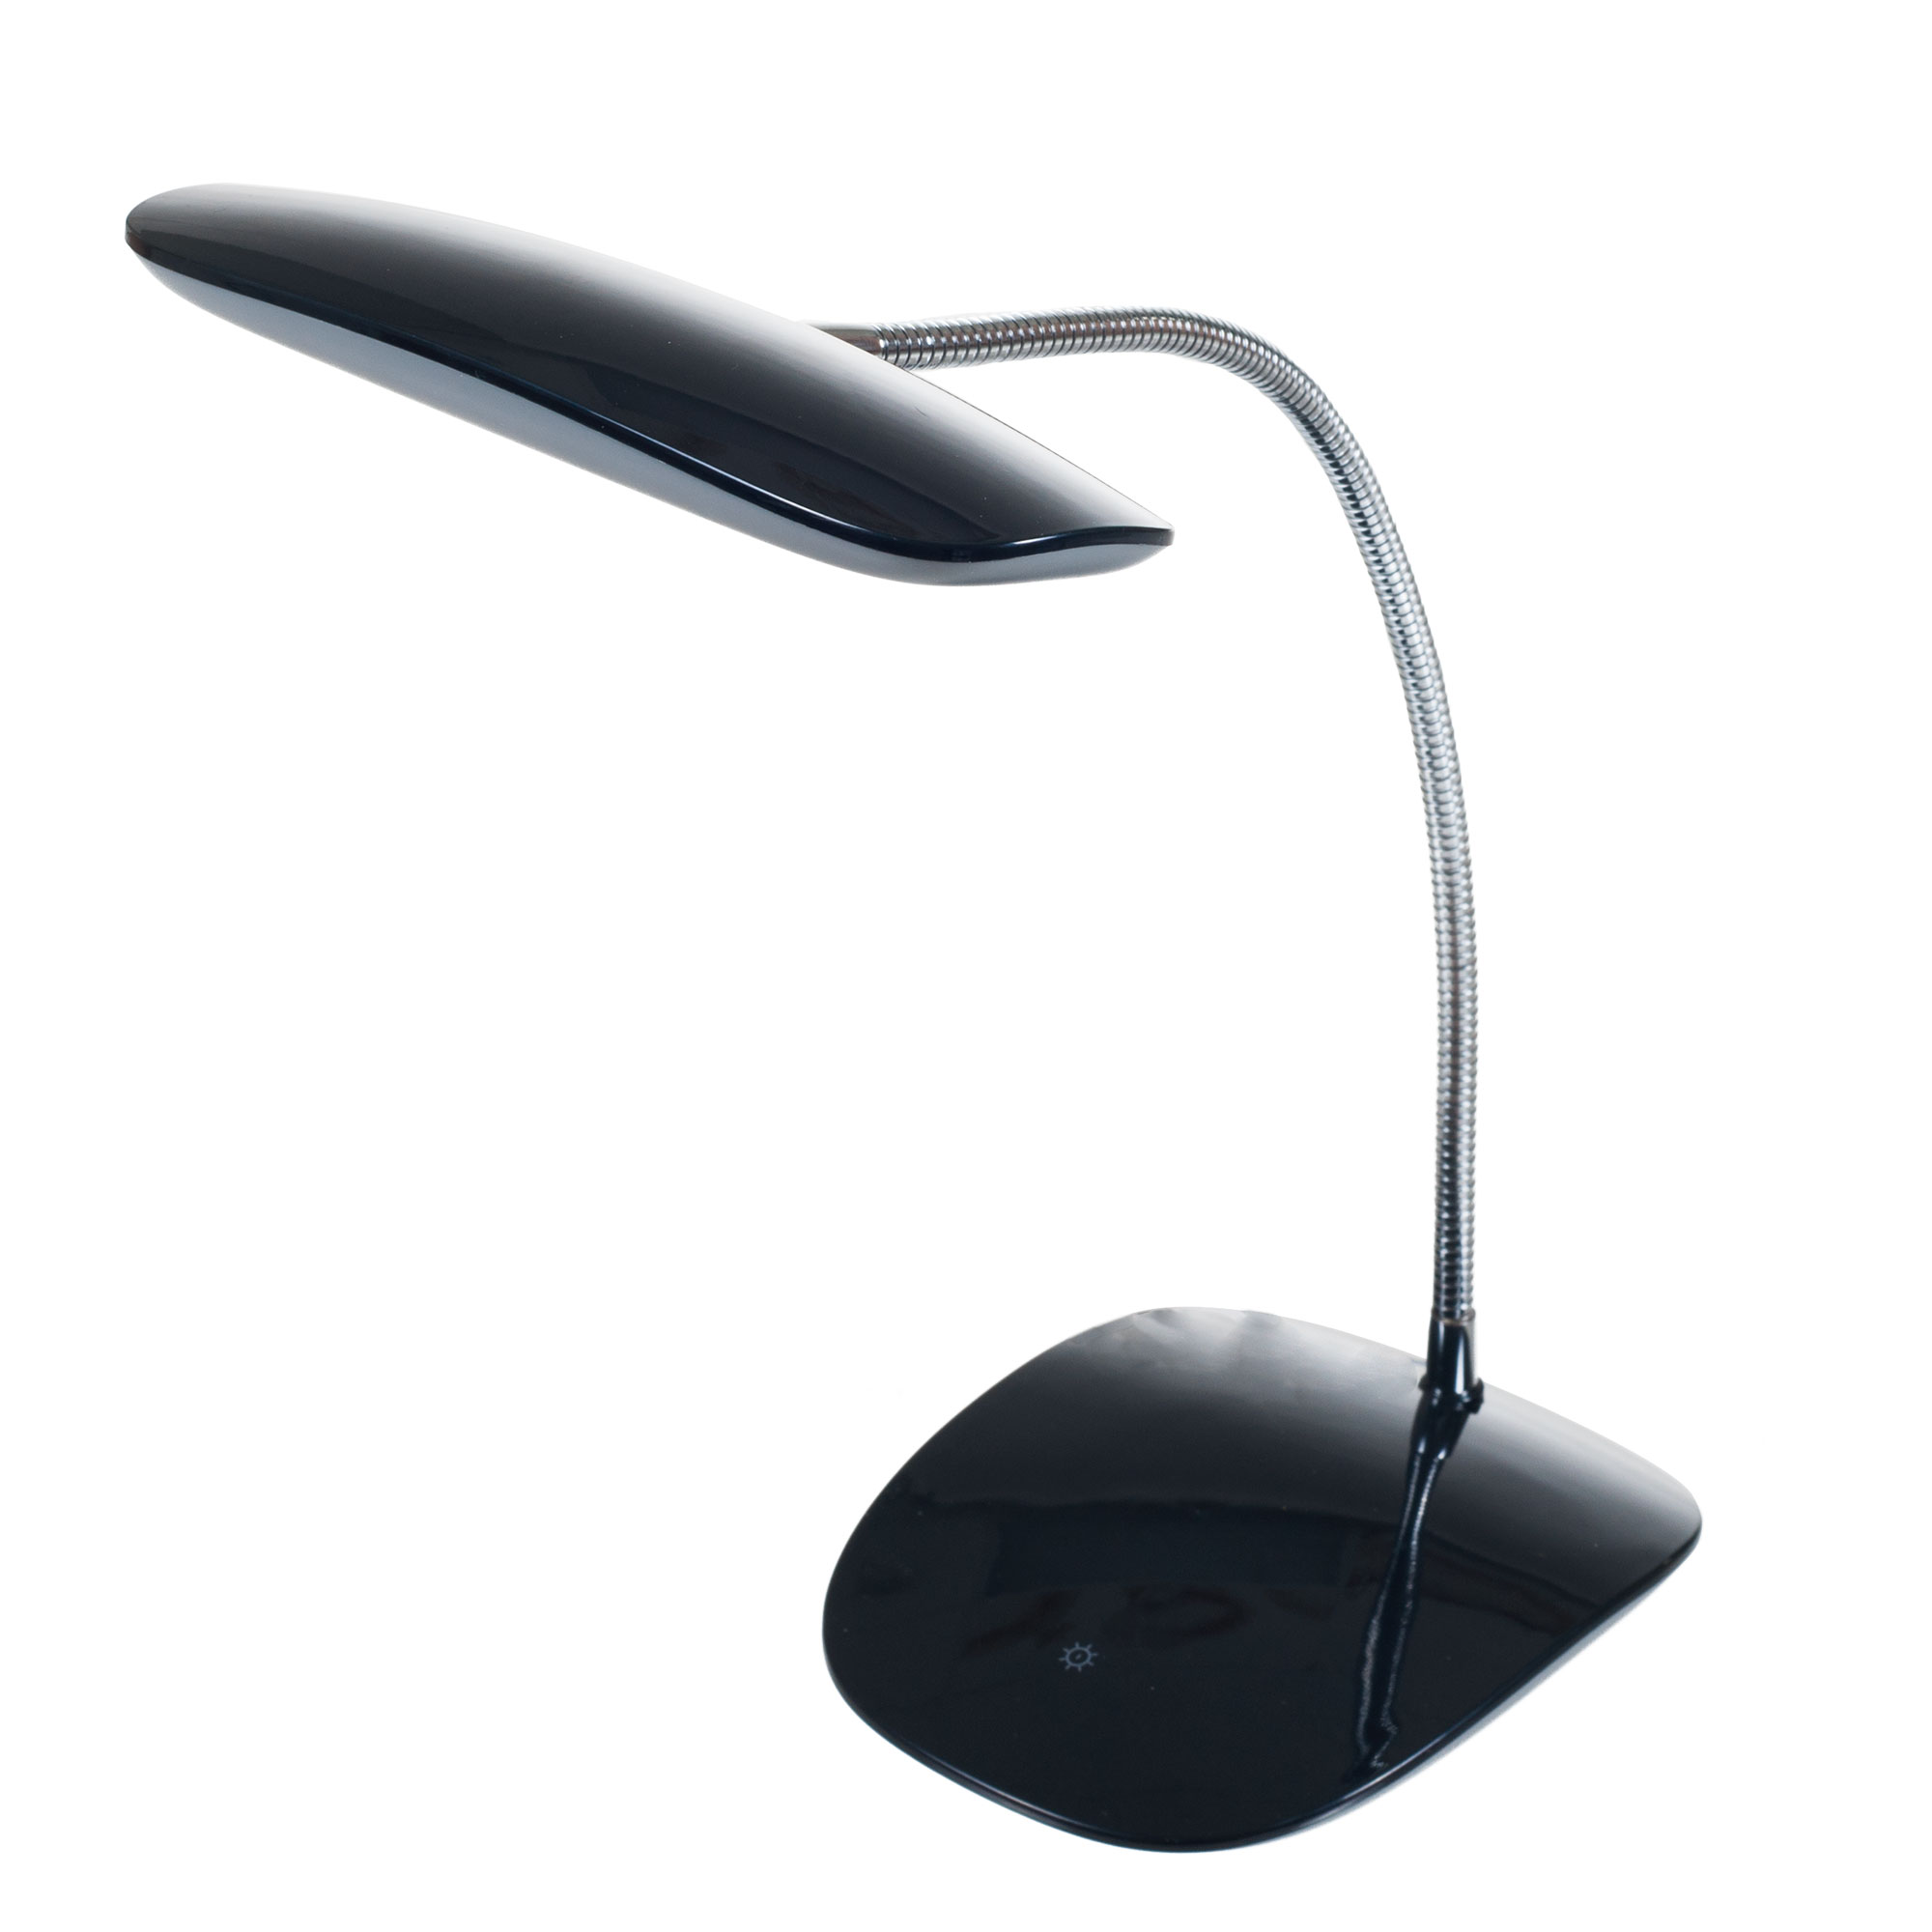 Northwest Touch Activated LED USB Desk Lamp - Black